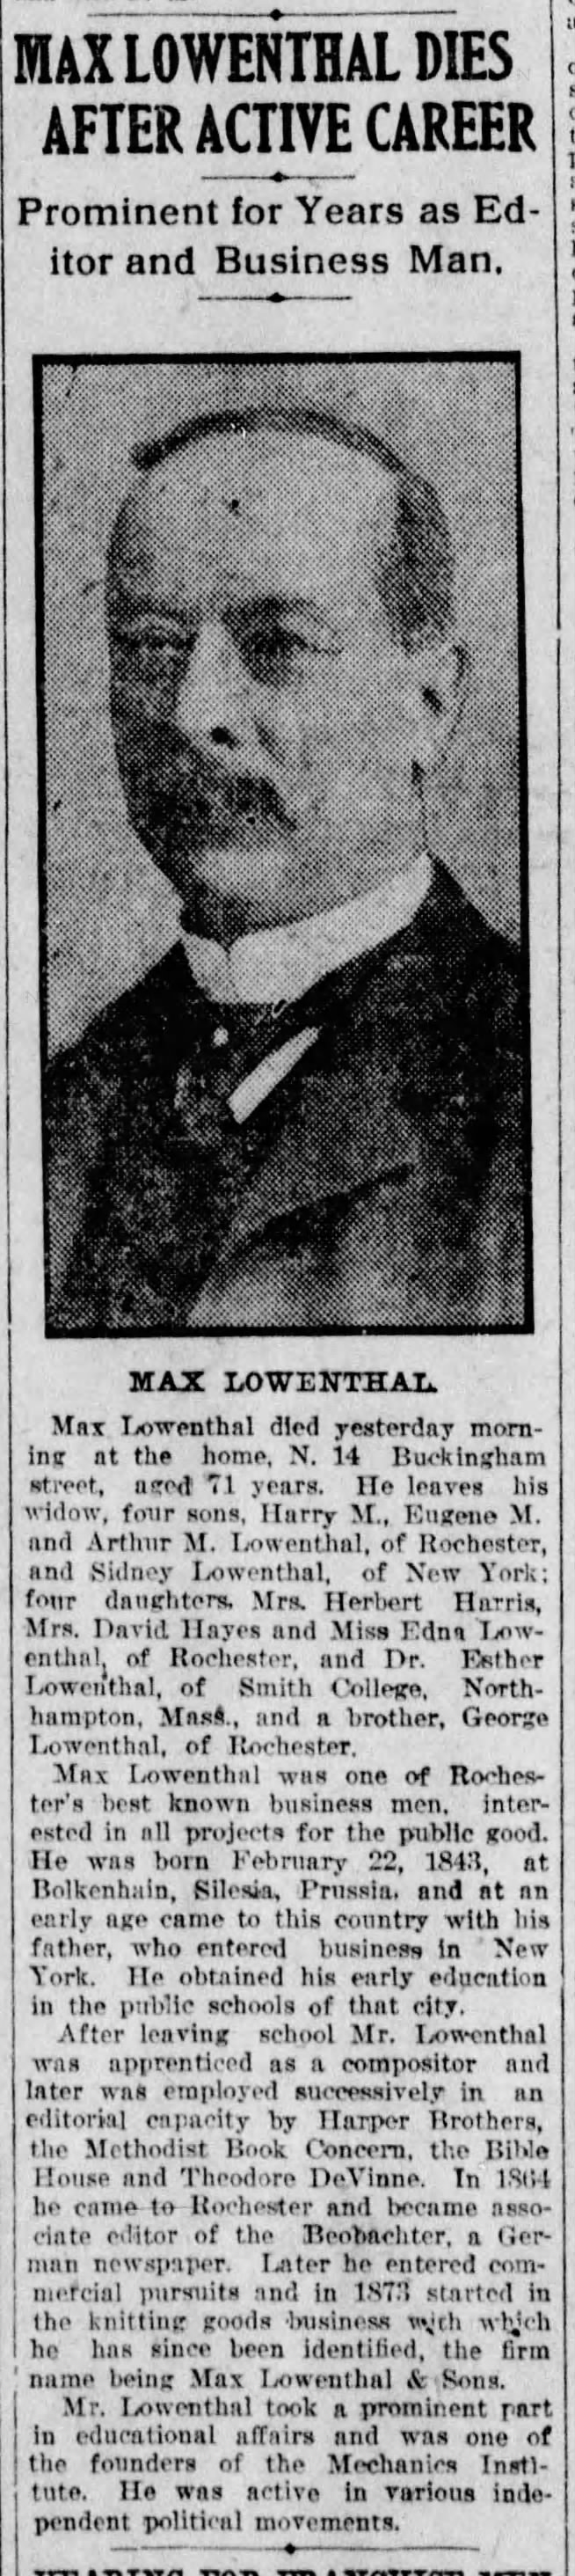 Max Lowenthal obituary